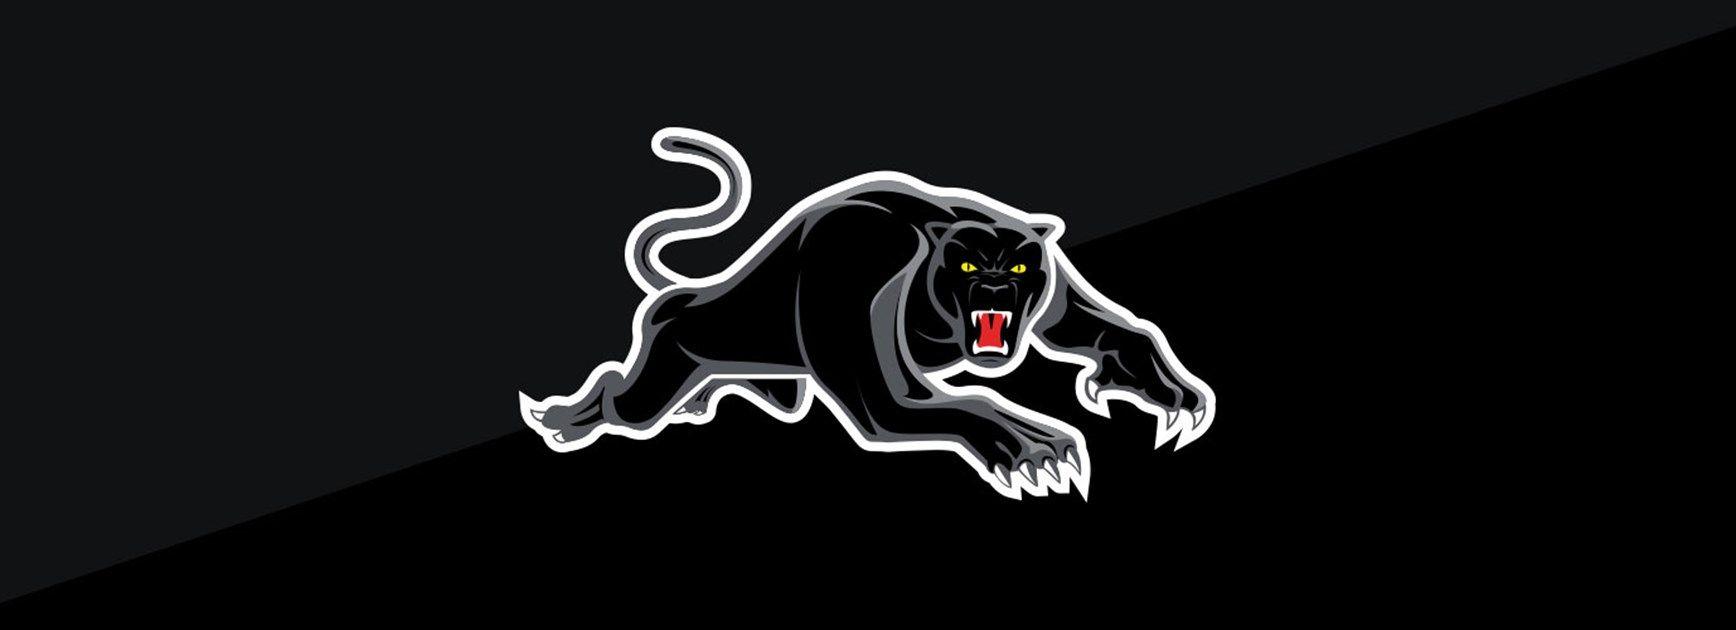 Panthers Logo - Panthers reveals renewed logos for 2019